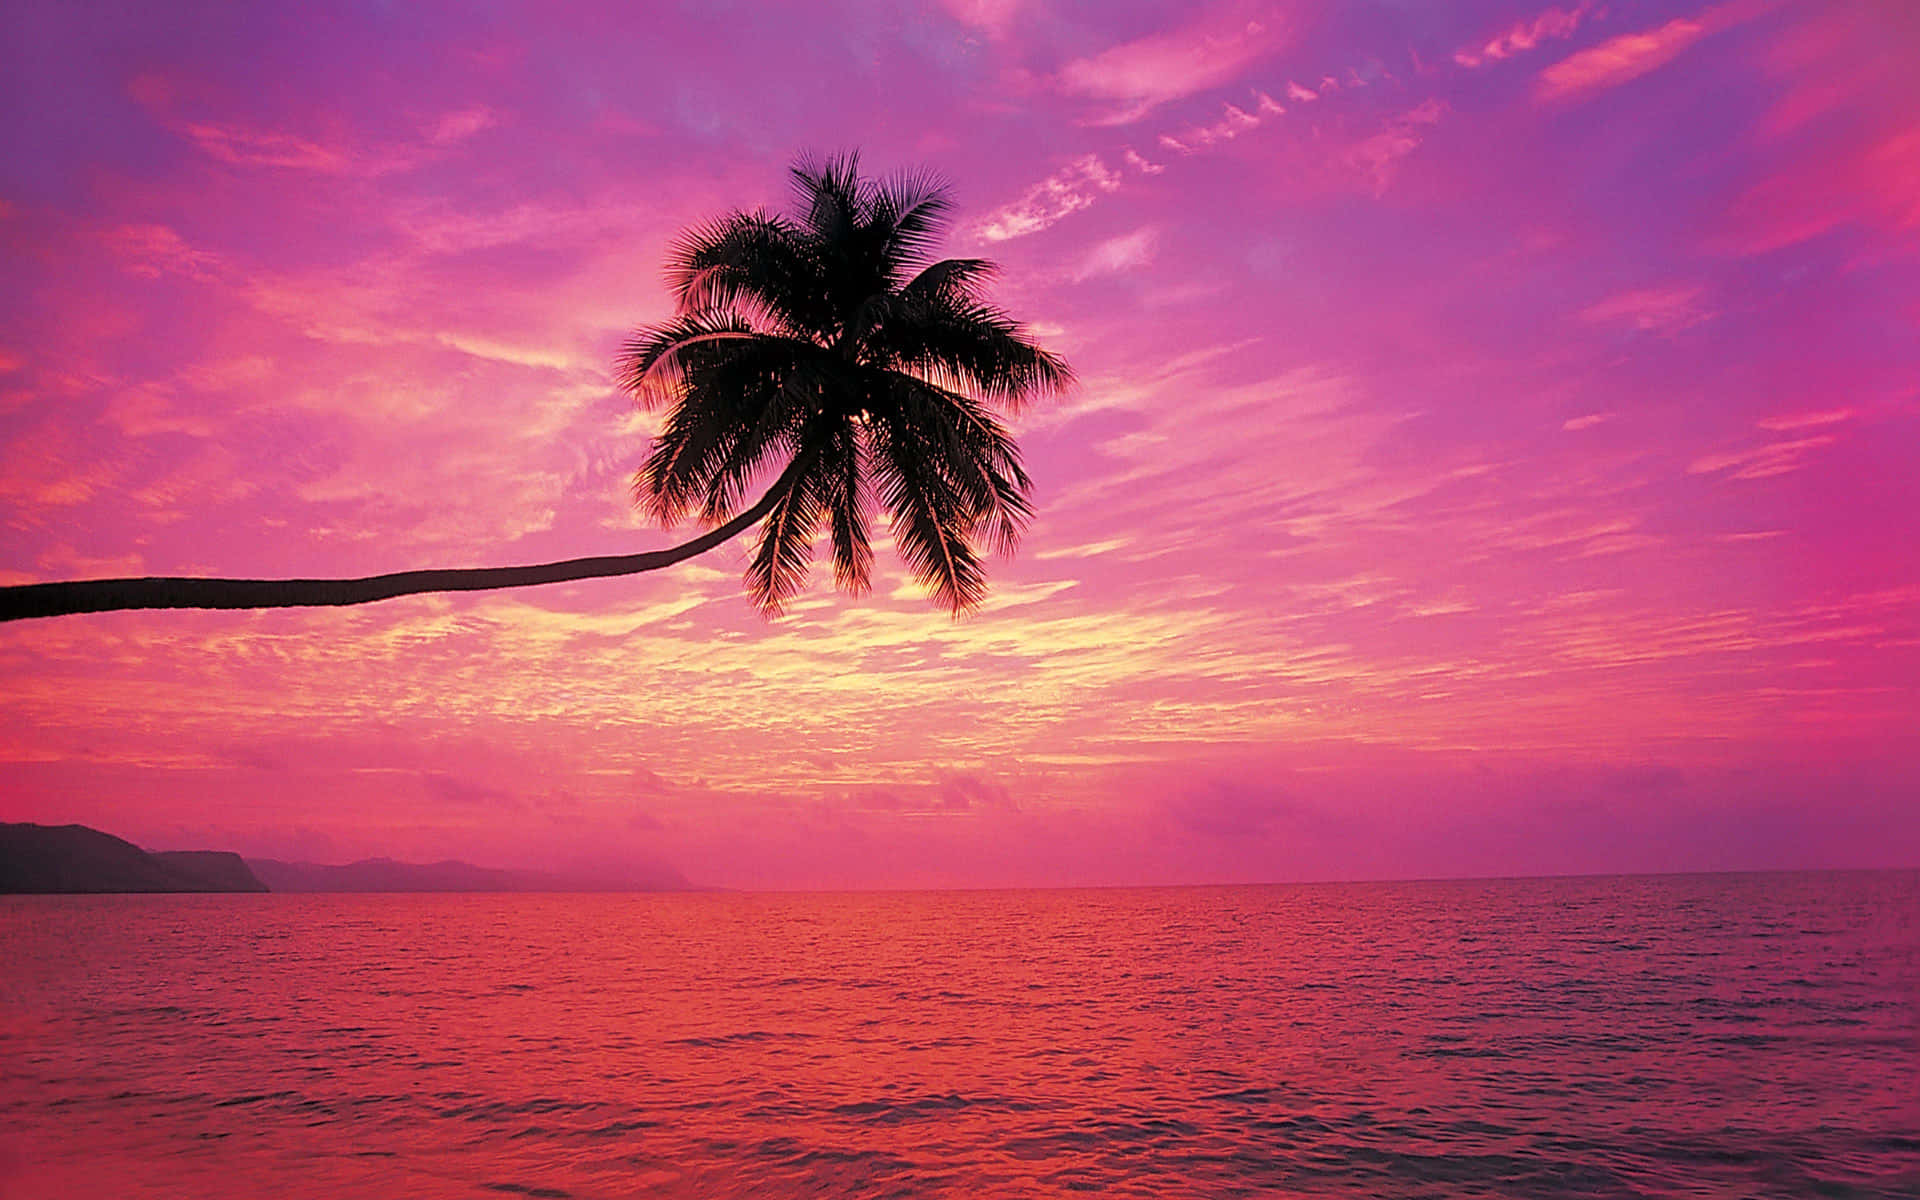 “A Beautiful Sunset on the Beach”